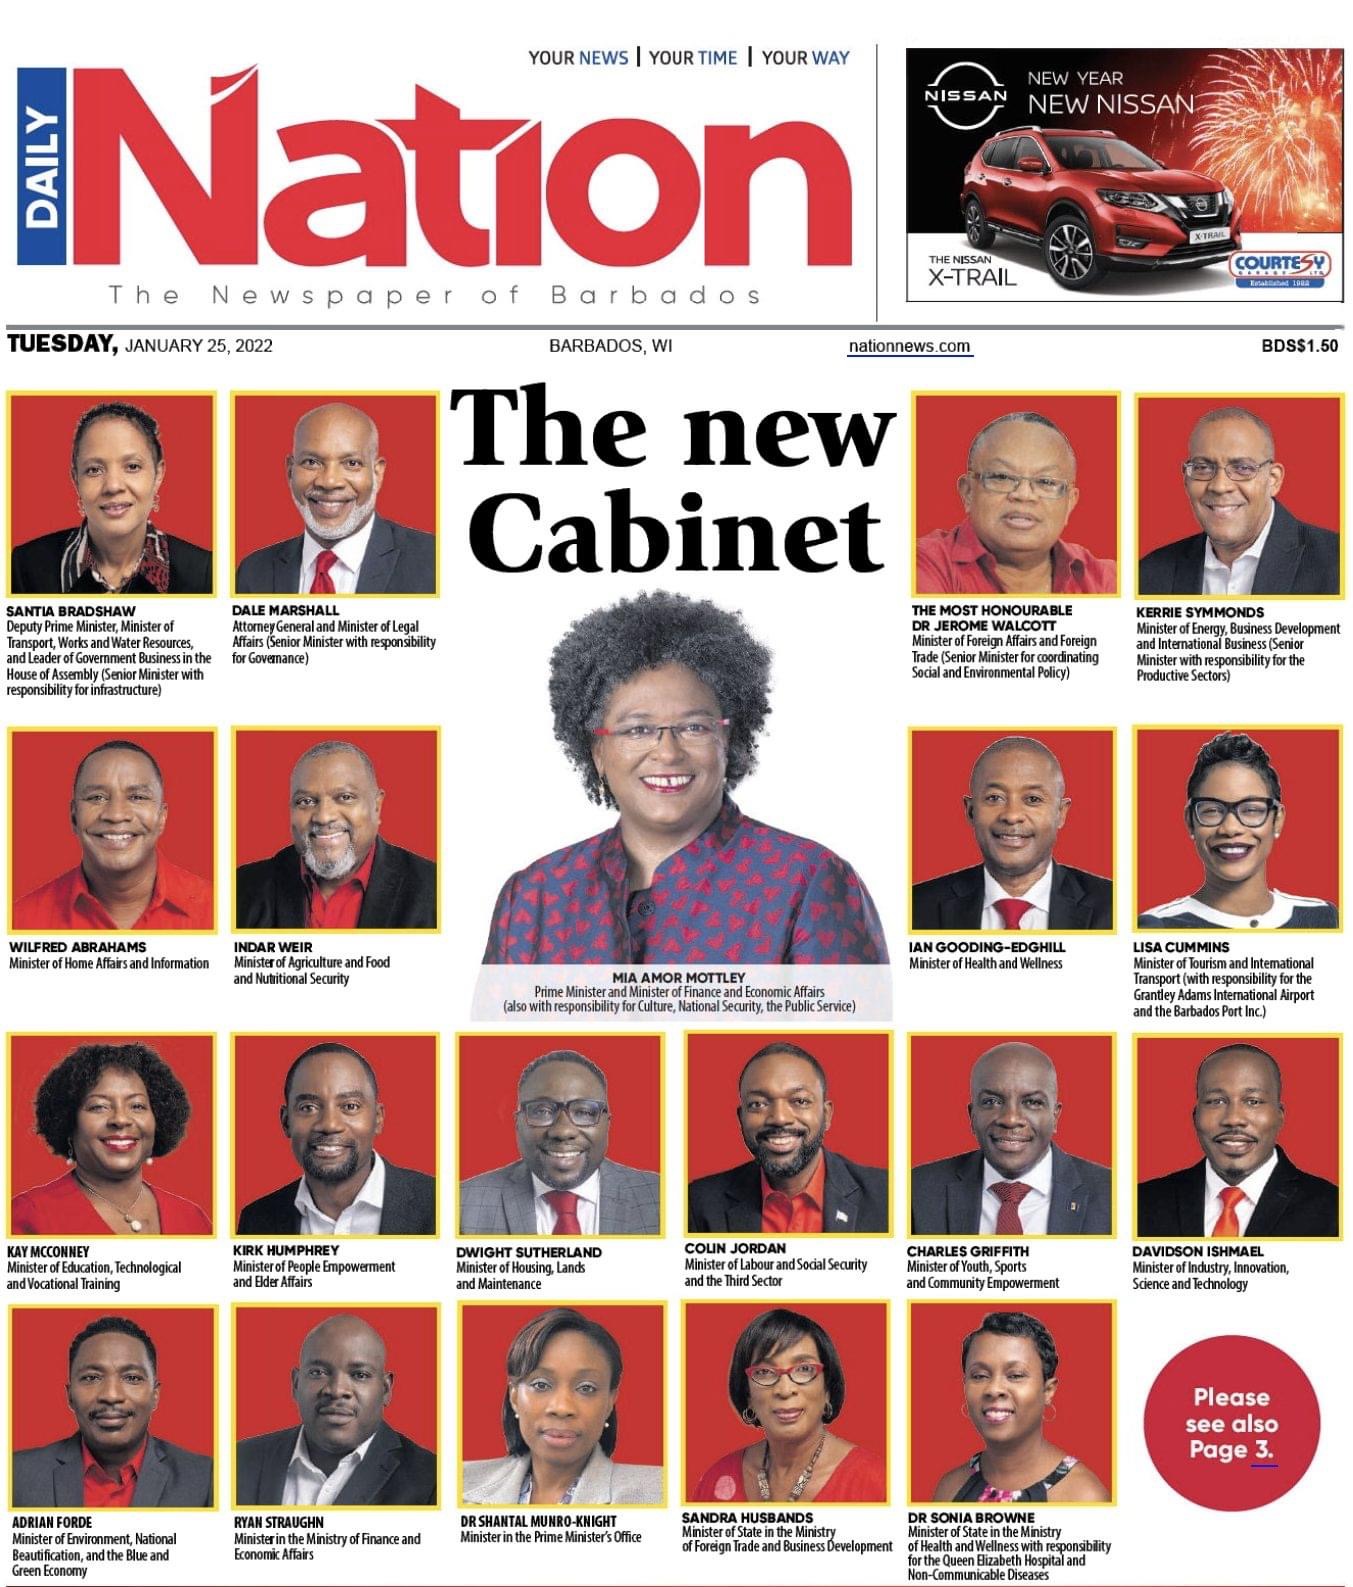 Barbados cabinet members to be sworn in on Jan. 26